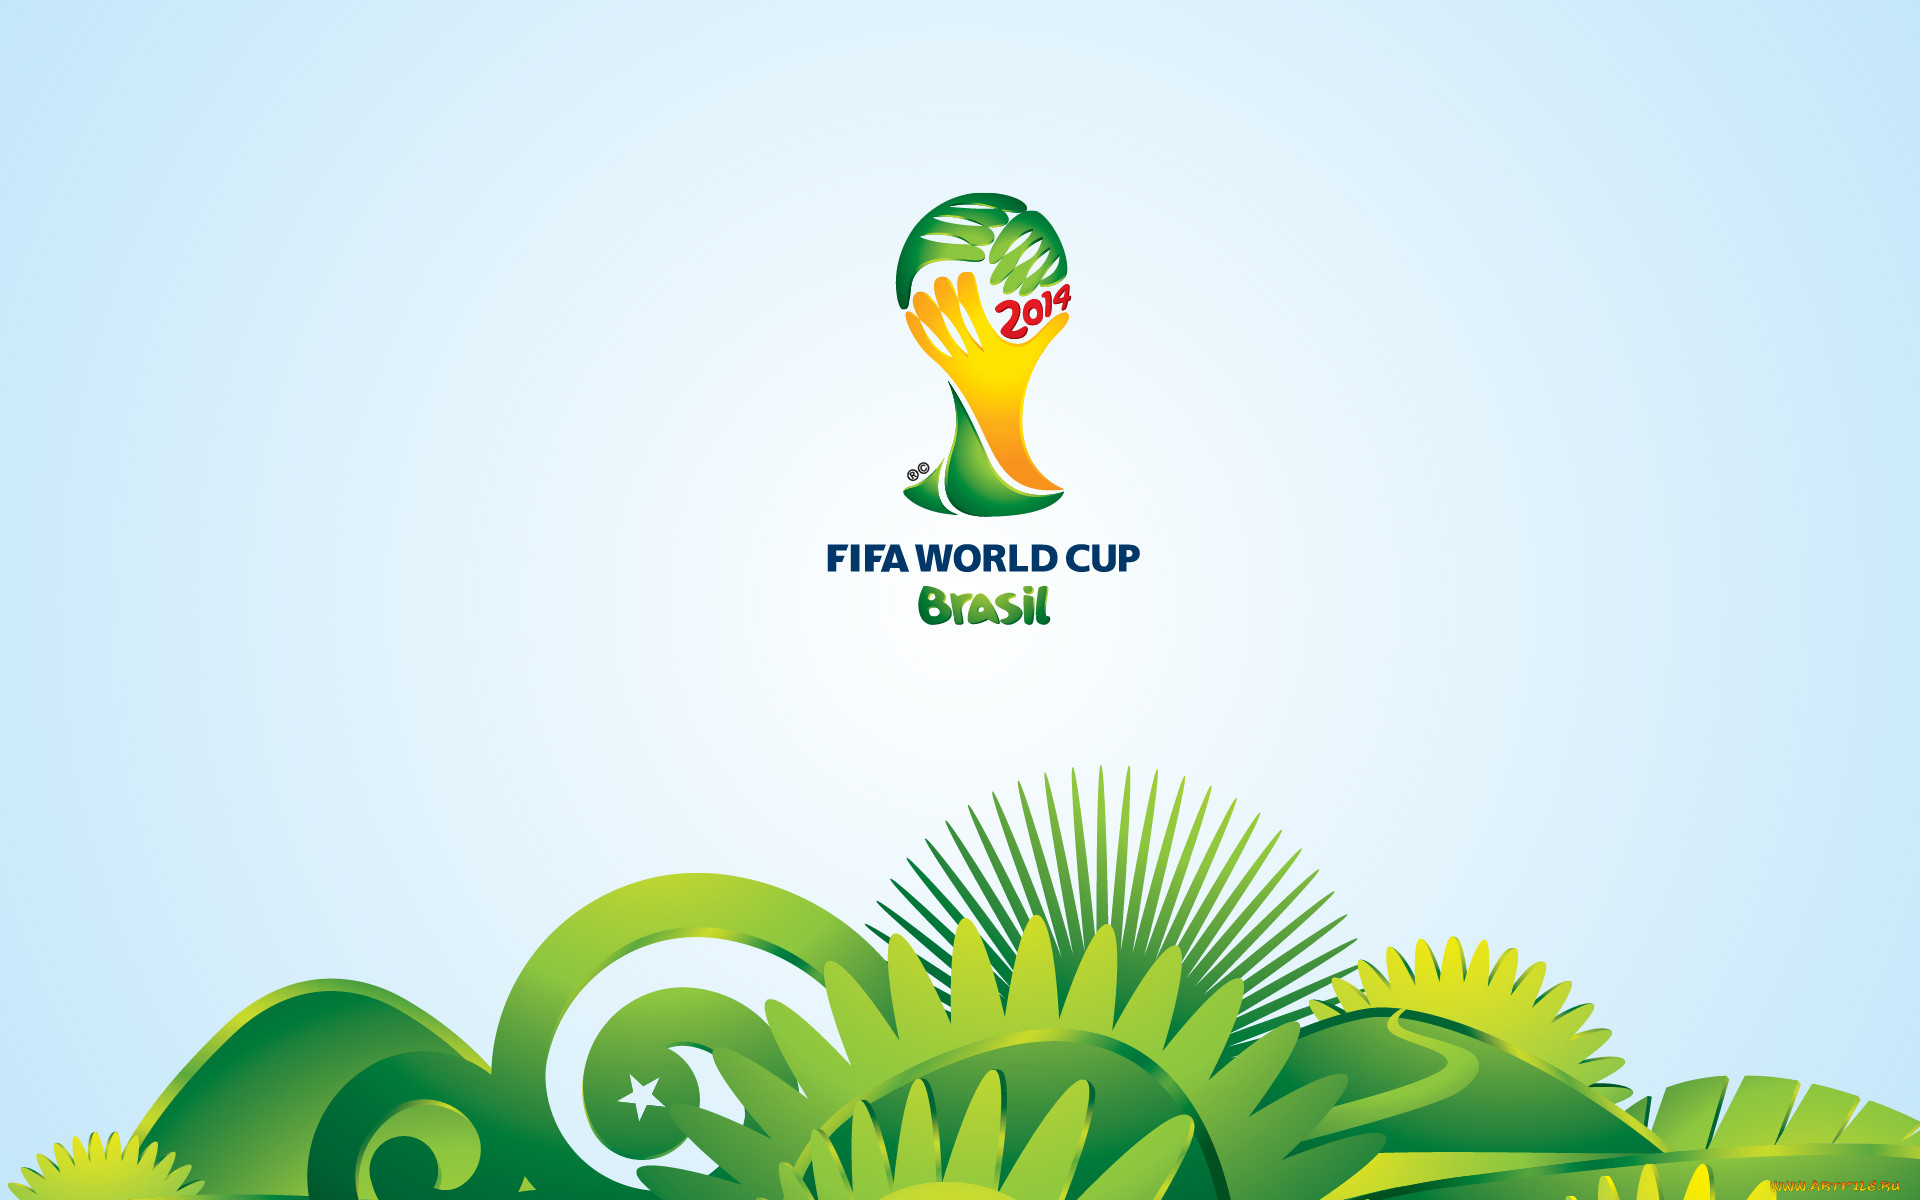 World cup 2014. ФИФА 2014 Бразилия. ЧМ В Бразилии 2014. Бразилия 2014 лого. Бразилия World Cup.